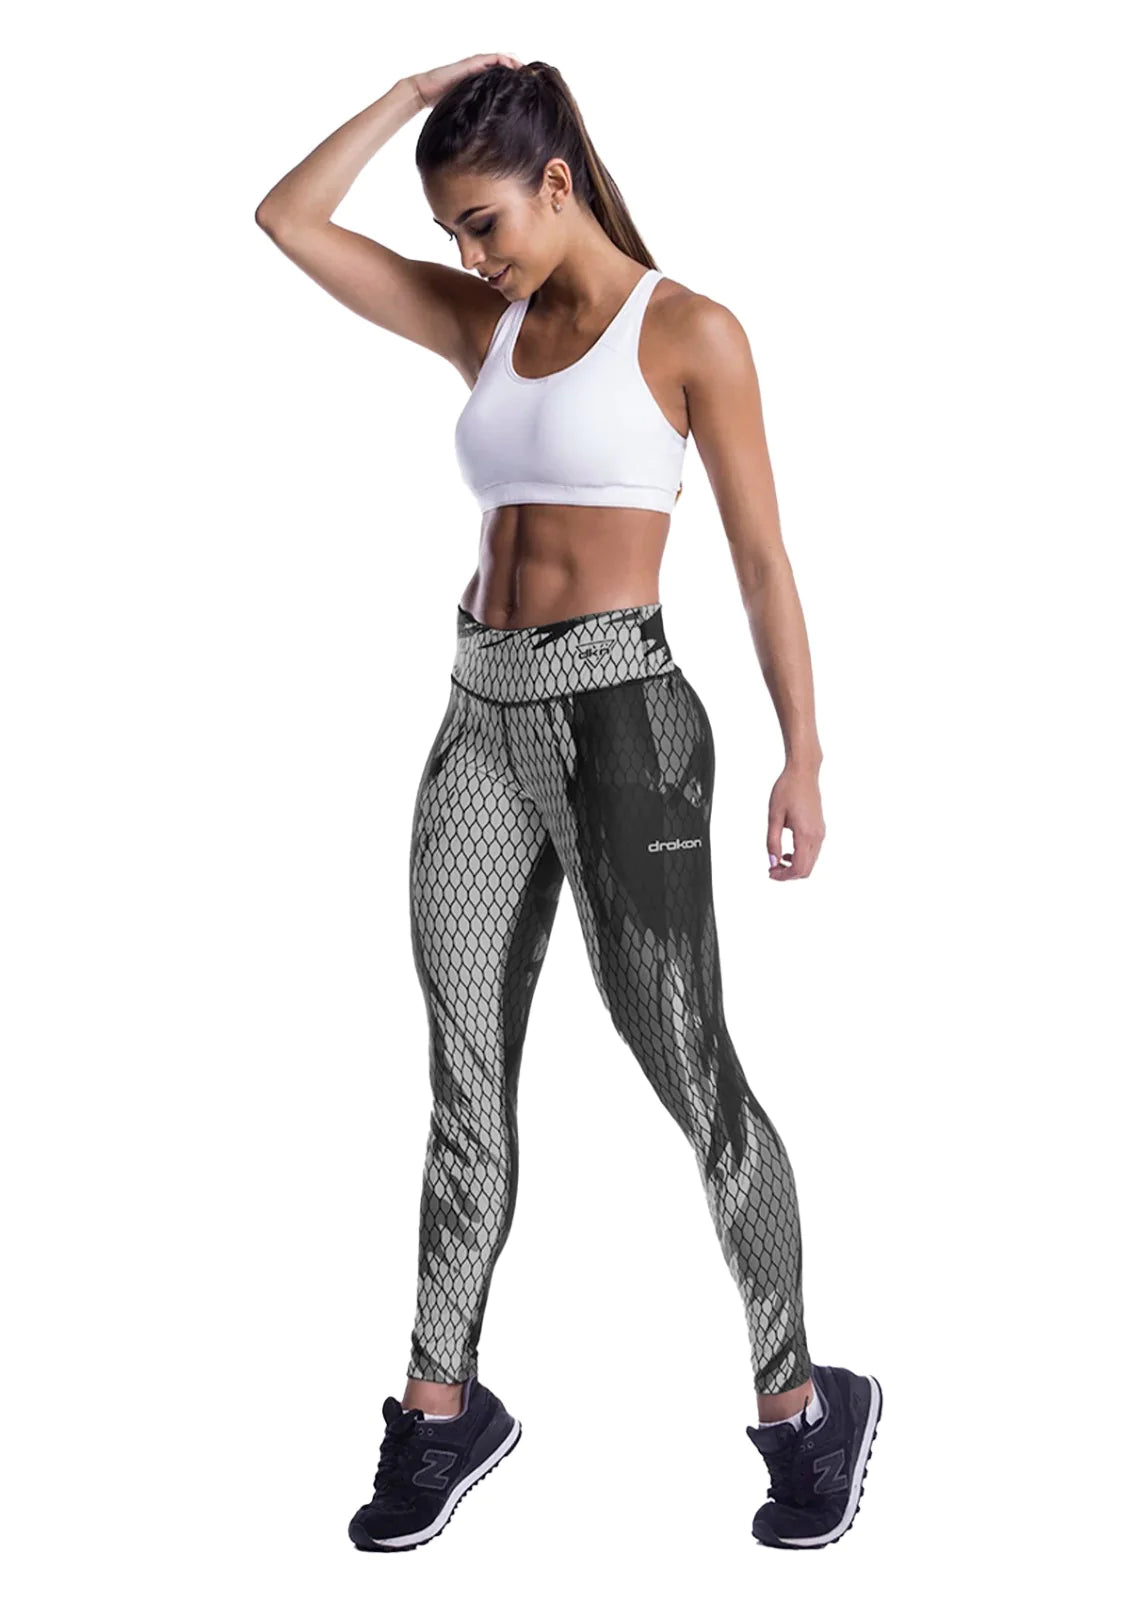 Leggings - Crossfit - Fitness - Running - Yoga Pants - Gym – BEST WEAR -  See Through Shirts - Sheer Nylon Tops - Second Skin - Transparent Pantyhose  - Tights - Plus Size - Women Men